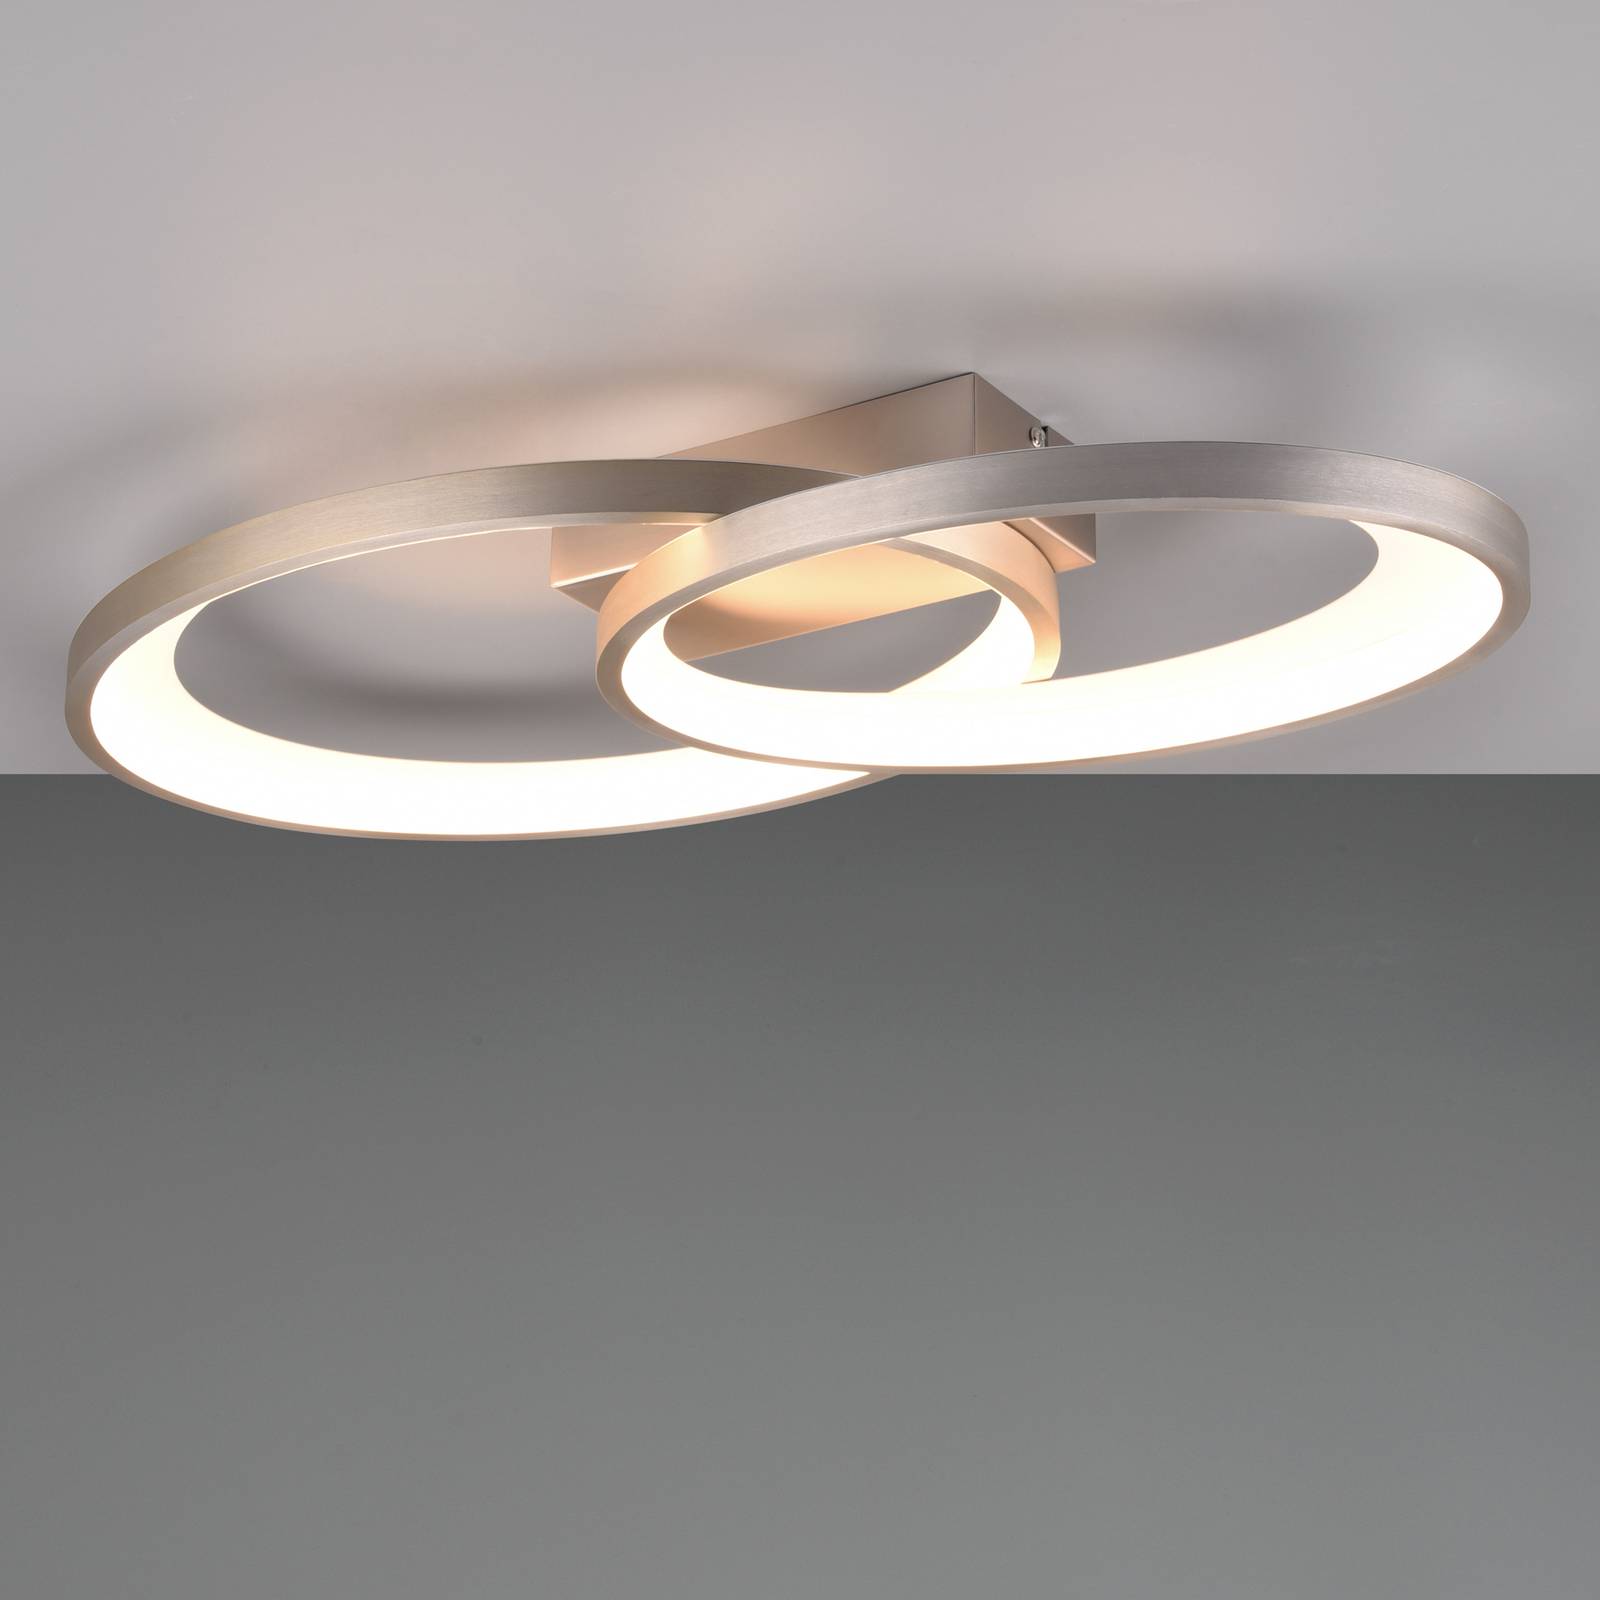 Image of Reality Leuchten Plafonnier LED Malaga avec 2 anneaux, nickel mat 4017807576948